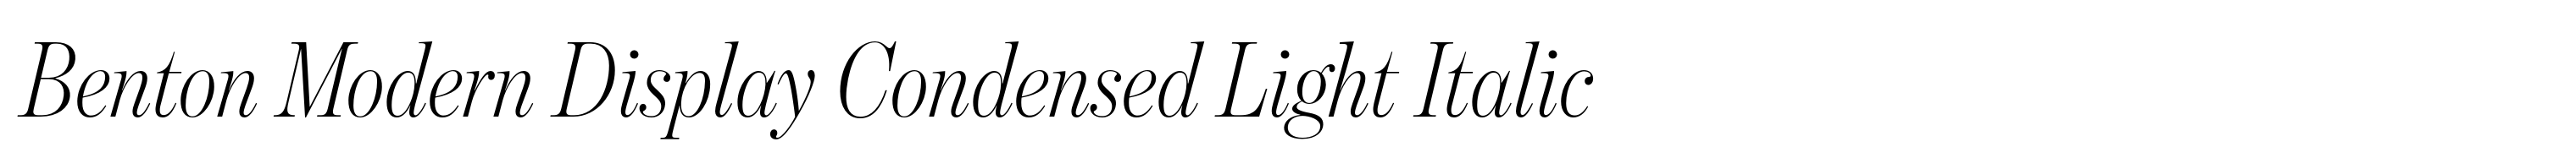 Benton Modern Display Condensed Light Italic